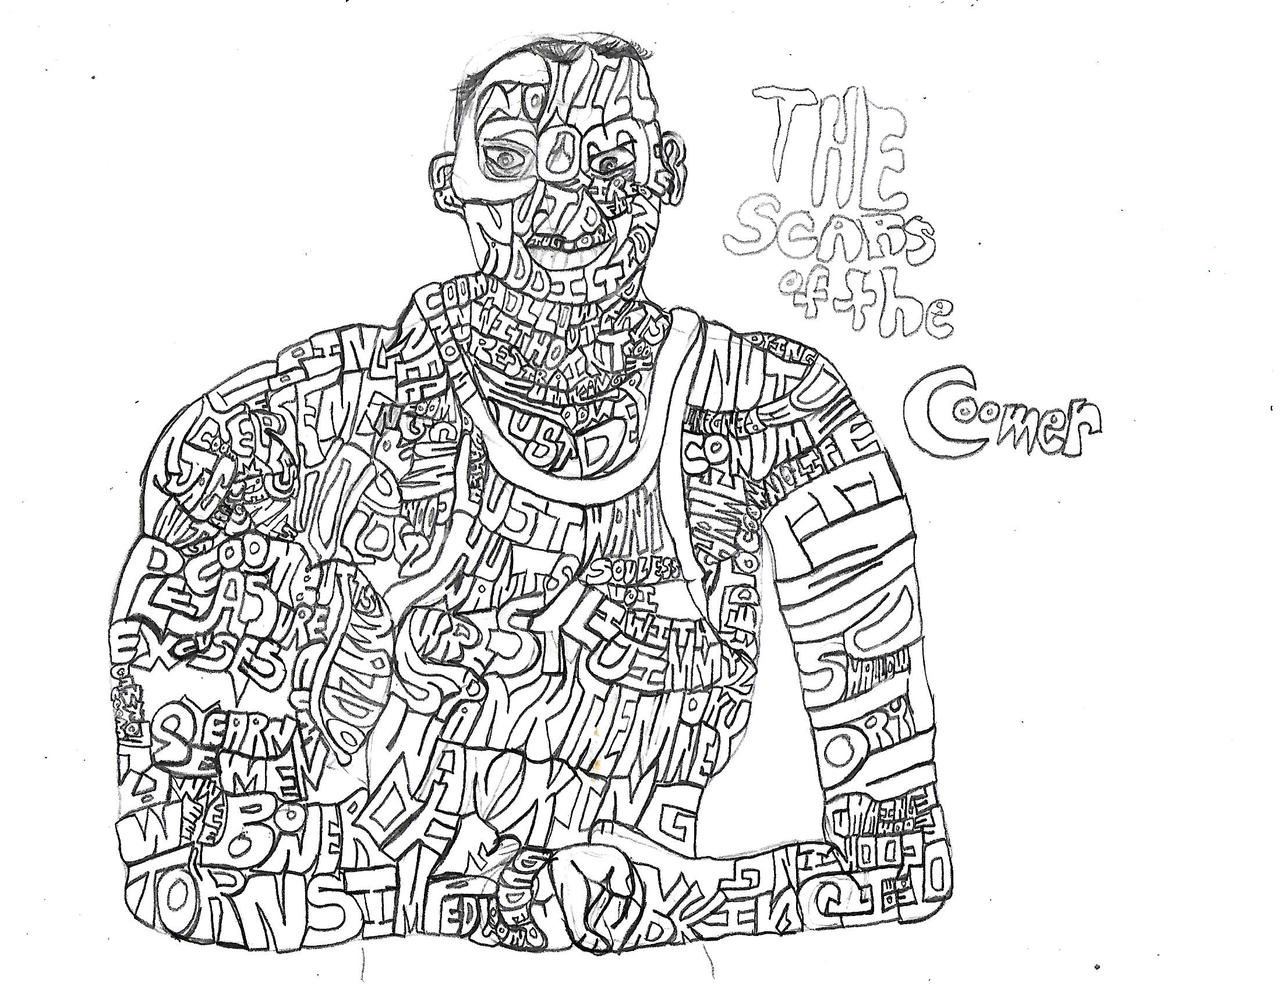 coomer (original) drawn by mossacannibalis